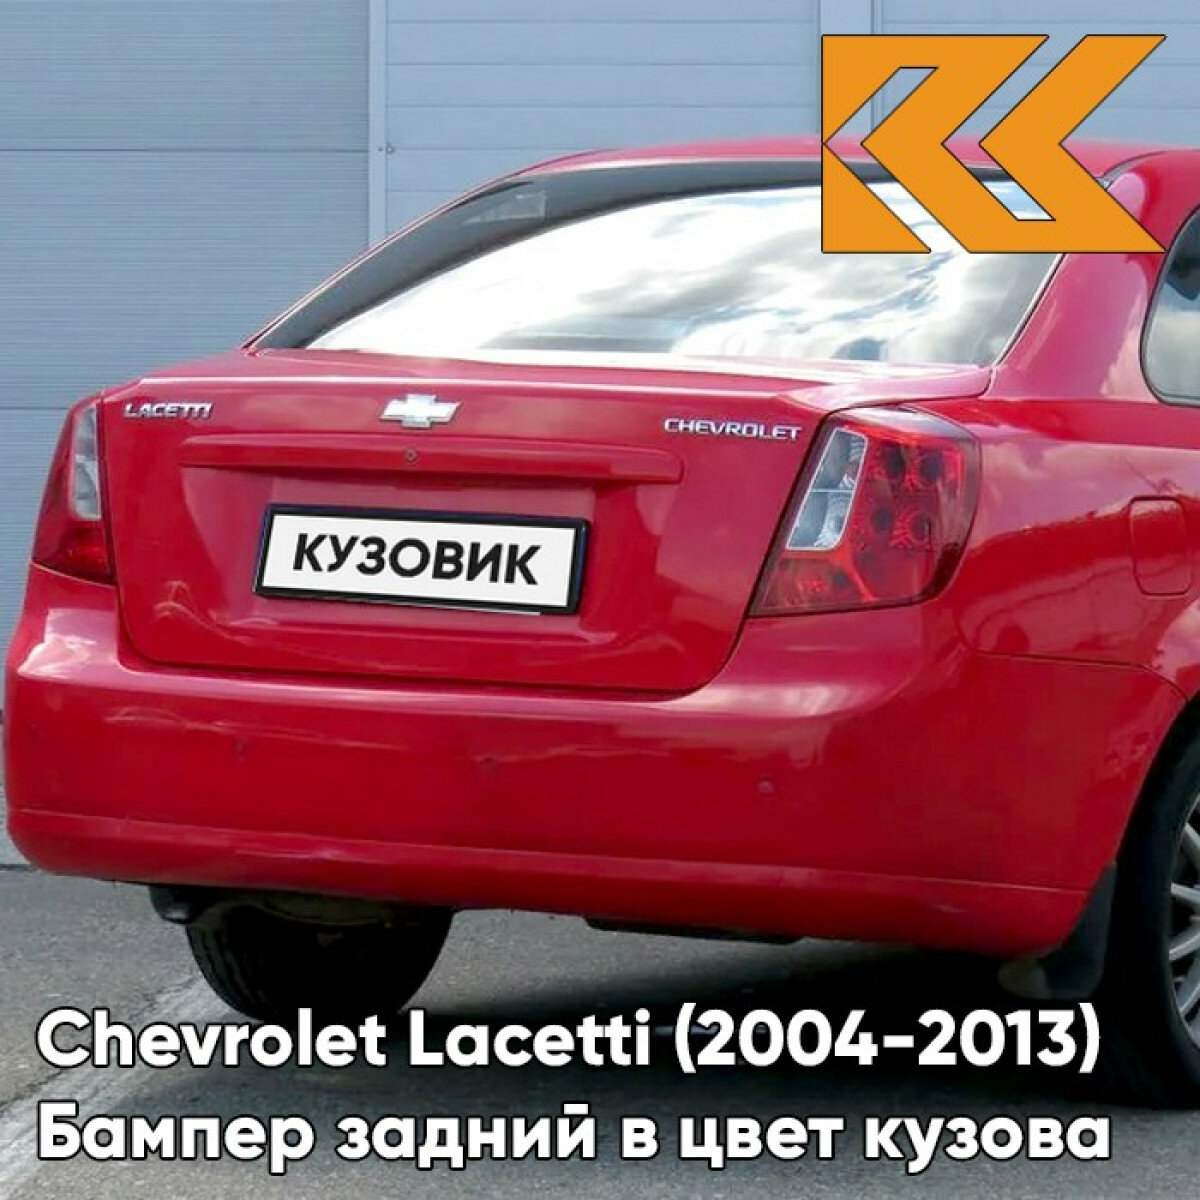 Бампер задний в цвет кузова Chevrolet Lacetti Шевроле Лачетти седан 73L - Super Red - Красный